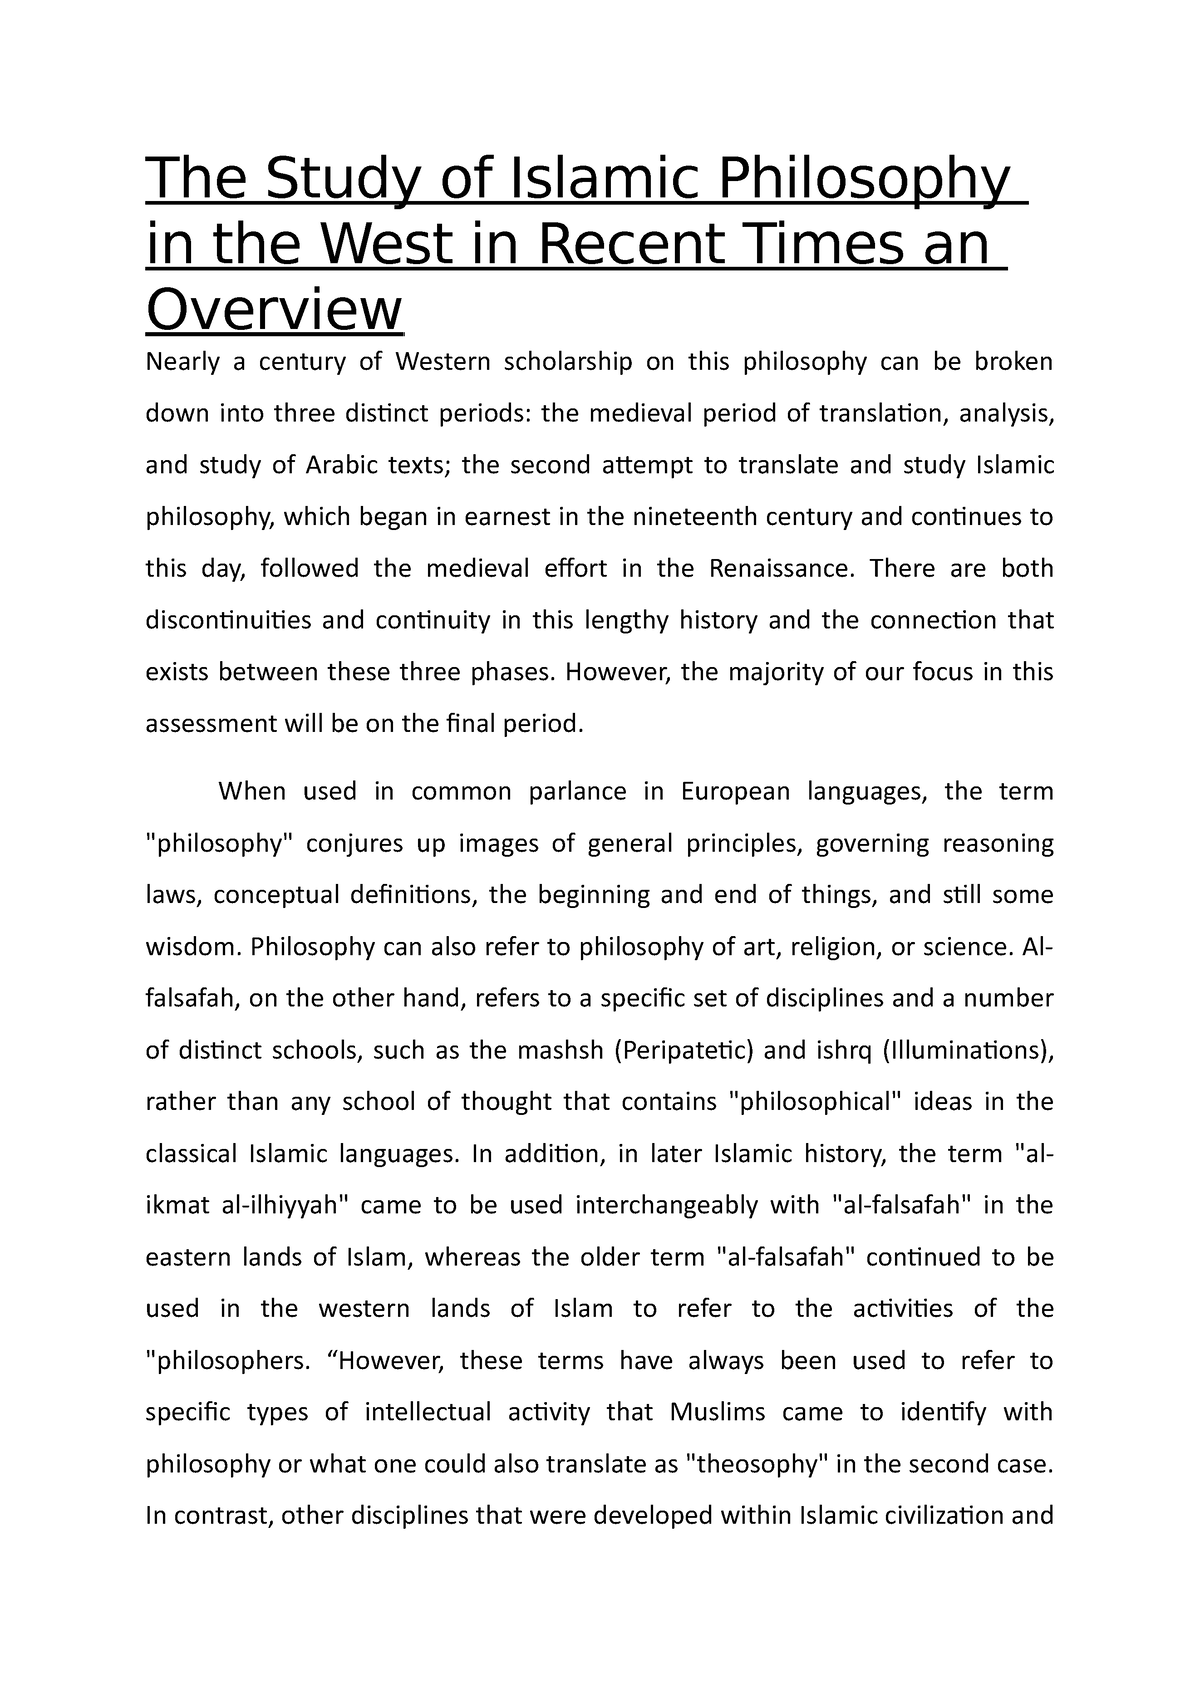 m.phil islamic studies thesis pdf